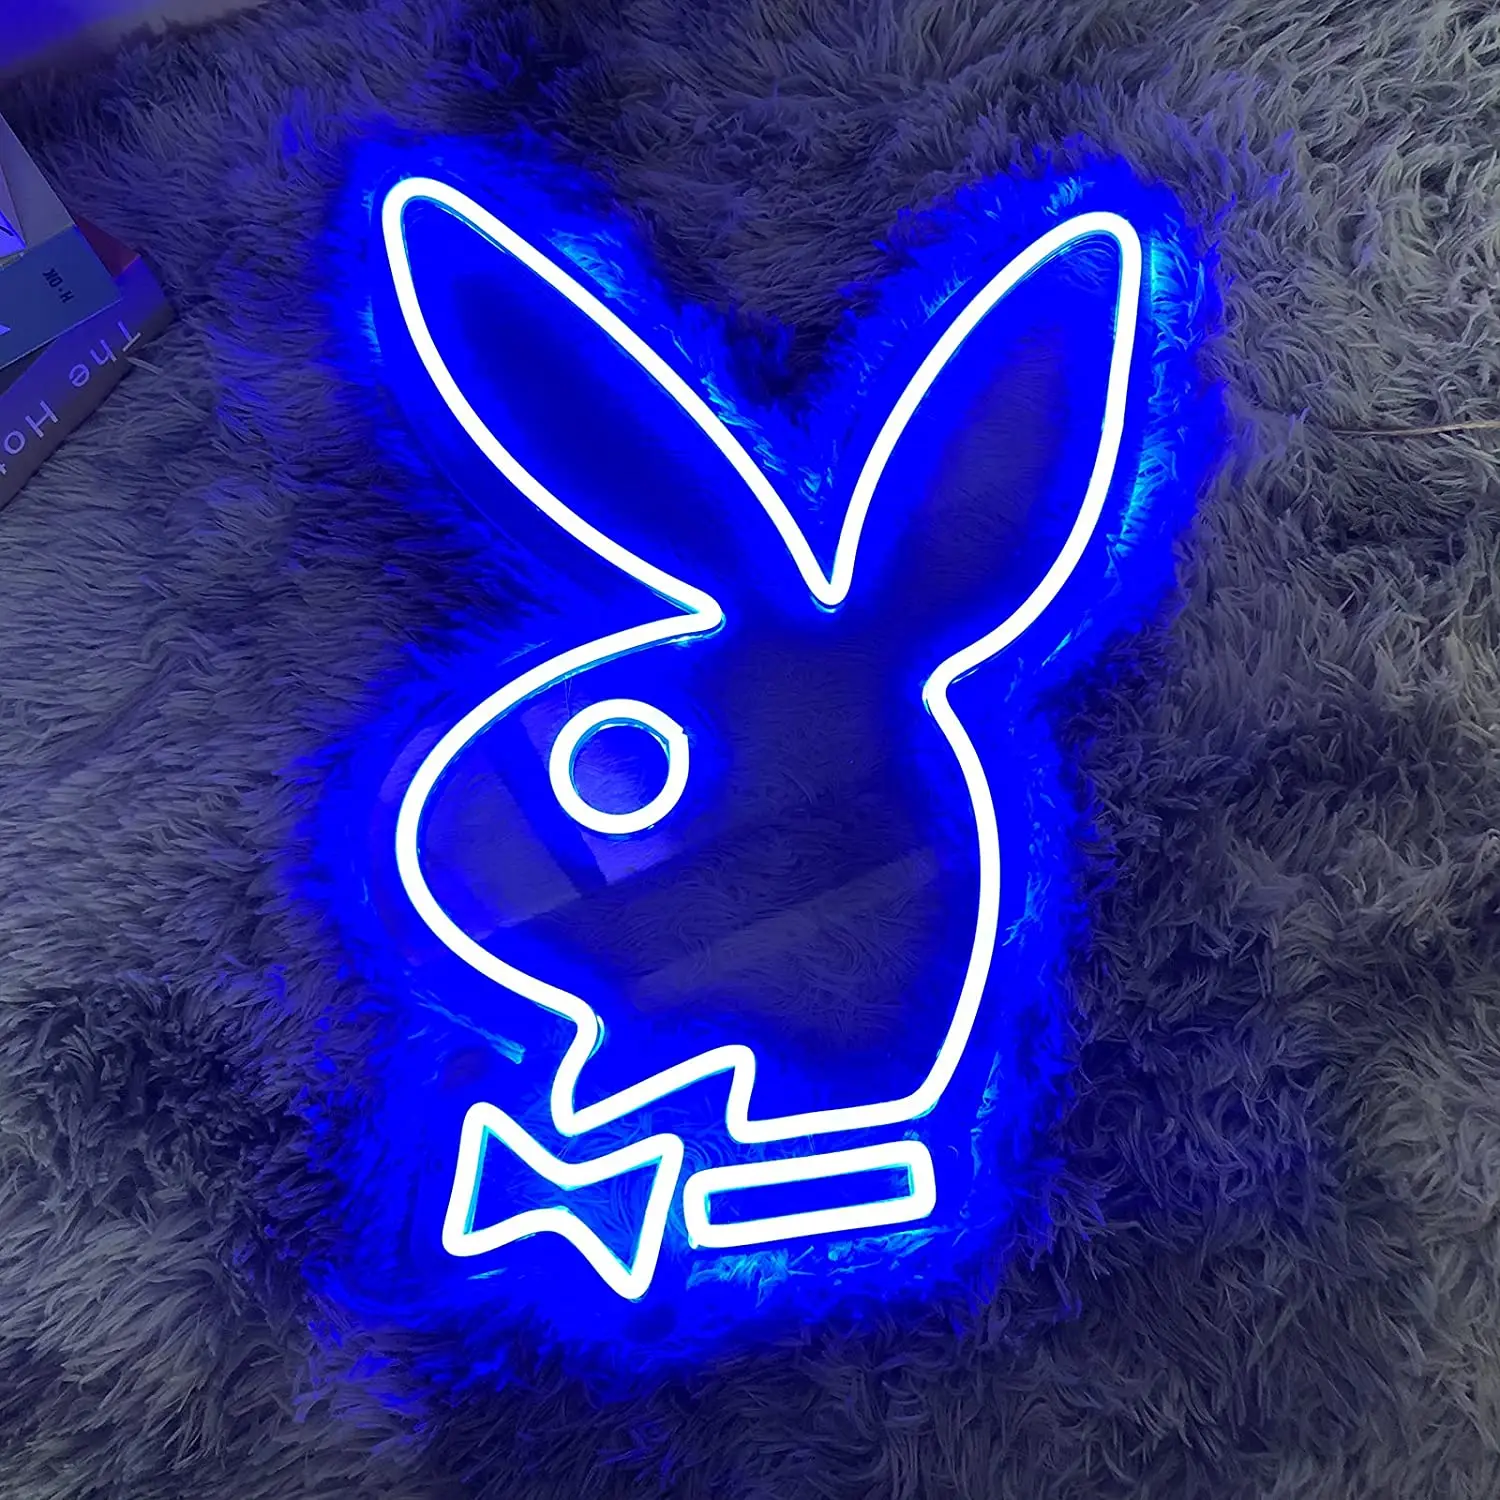 Buy Playboy Rabbit LED neon Signs Bunny Play Boy Neon Light Boyfriend  Girlfriend Decorations Bar Club Home Decor Party Room Wall Bedroom Wedding  # Couple Name Customized Salon Neon Light Sign Online